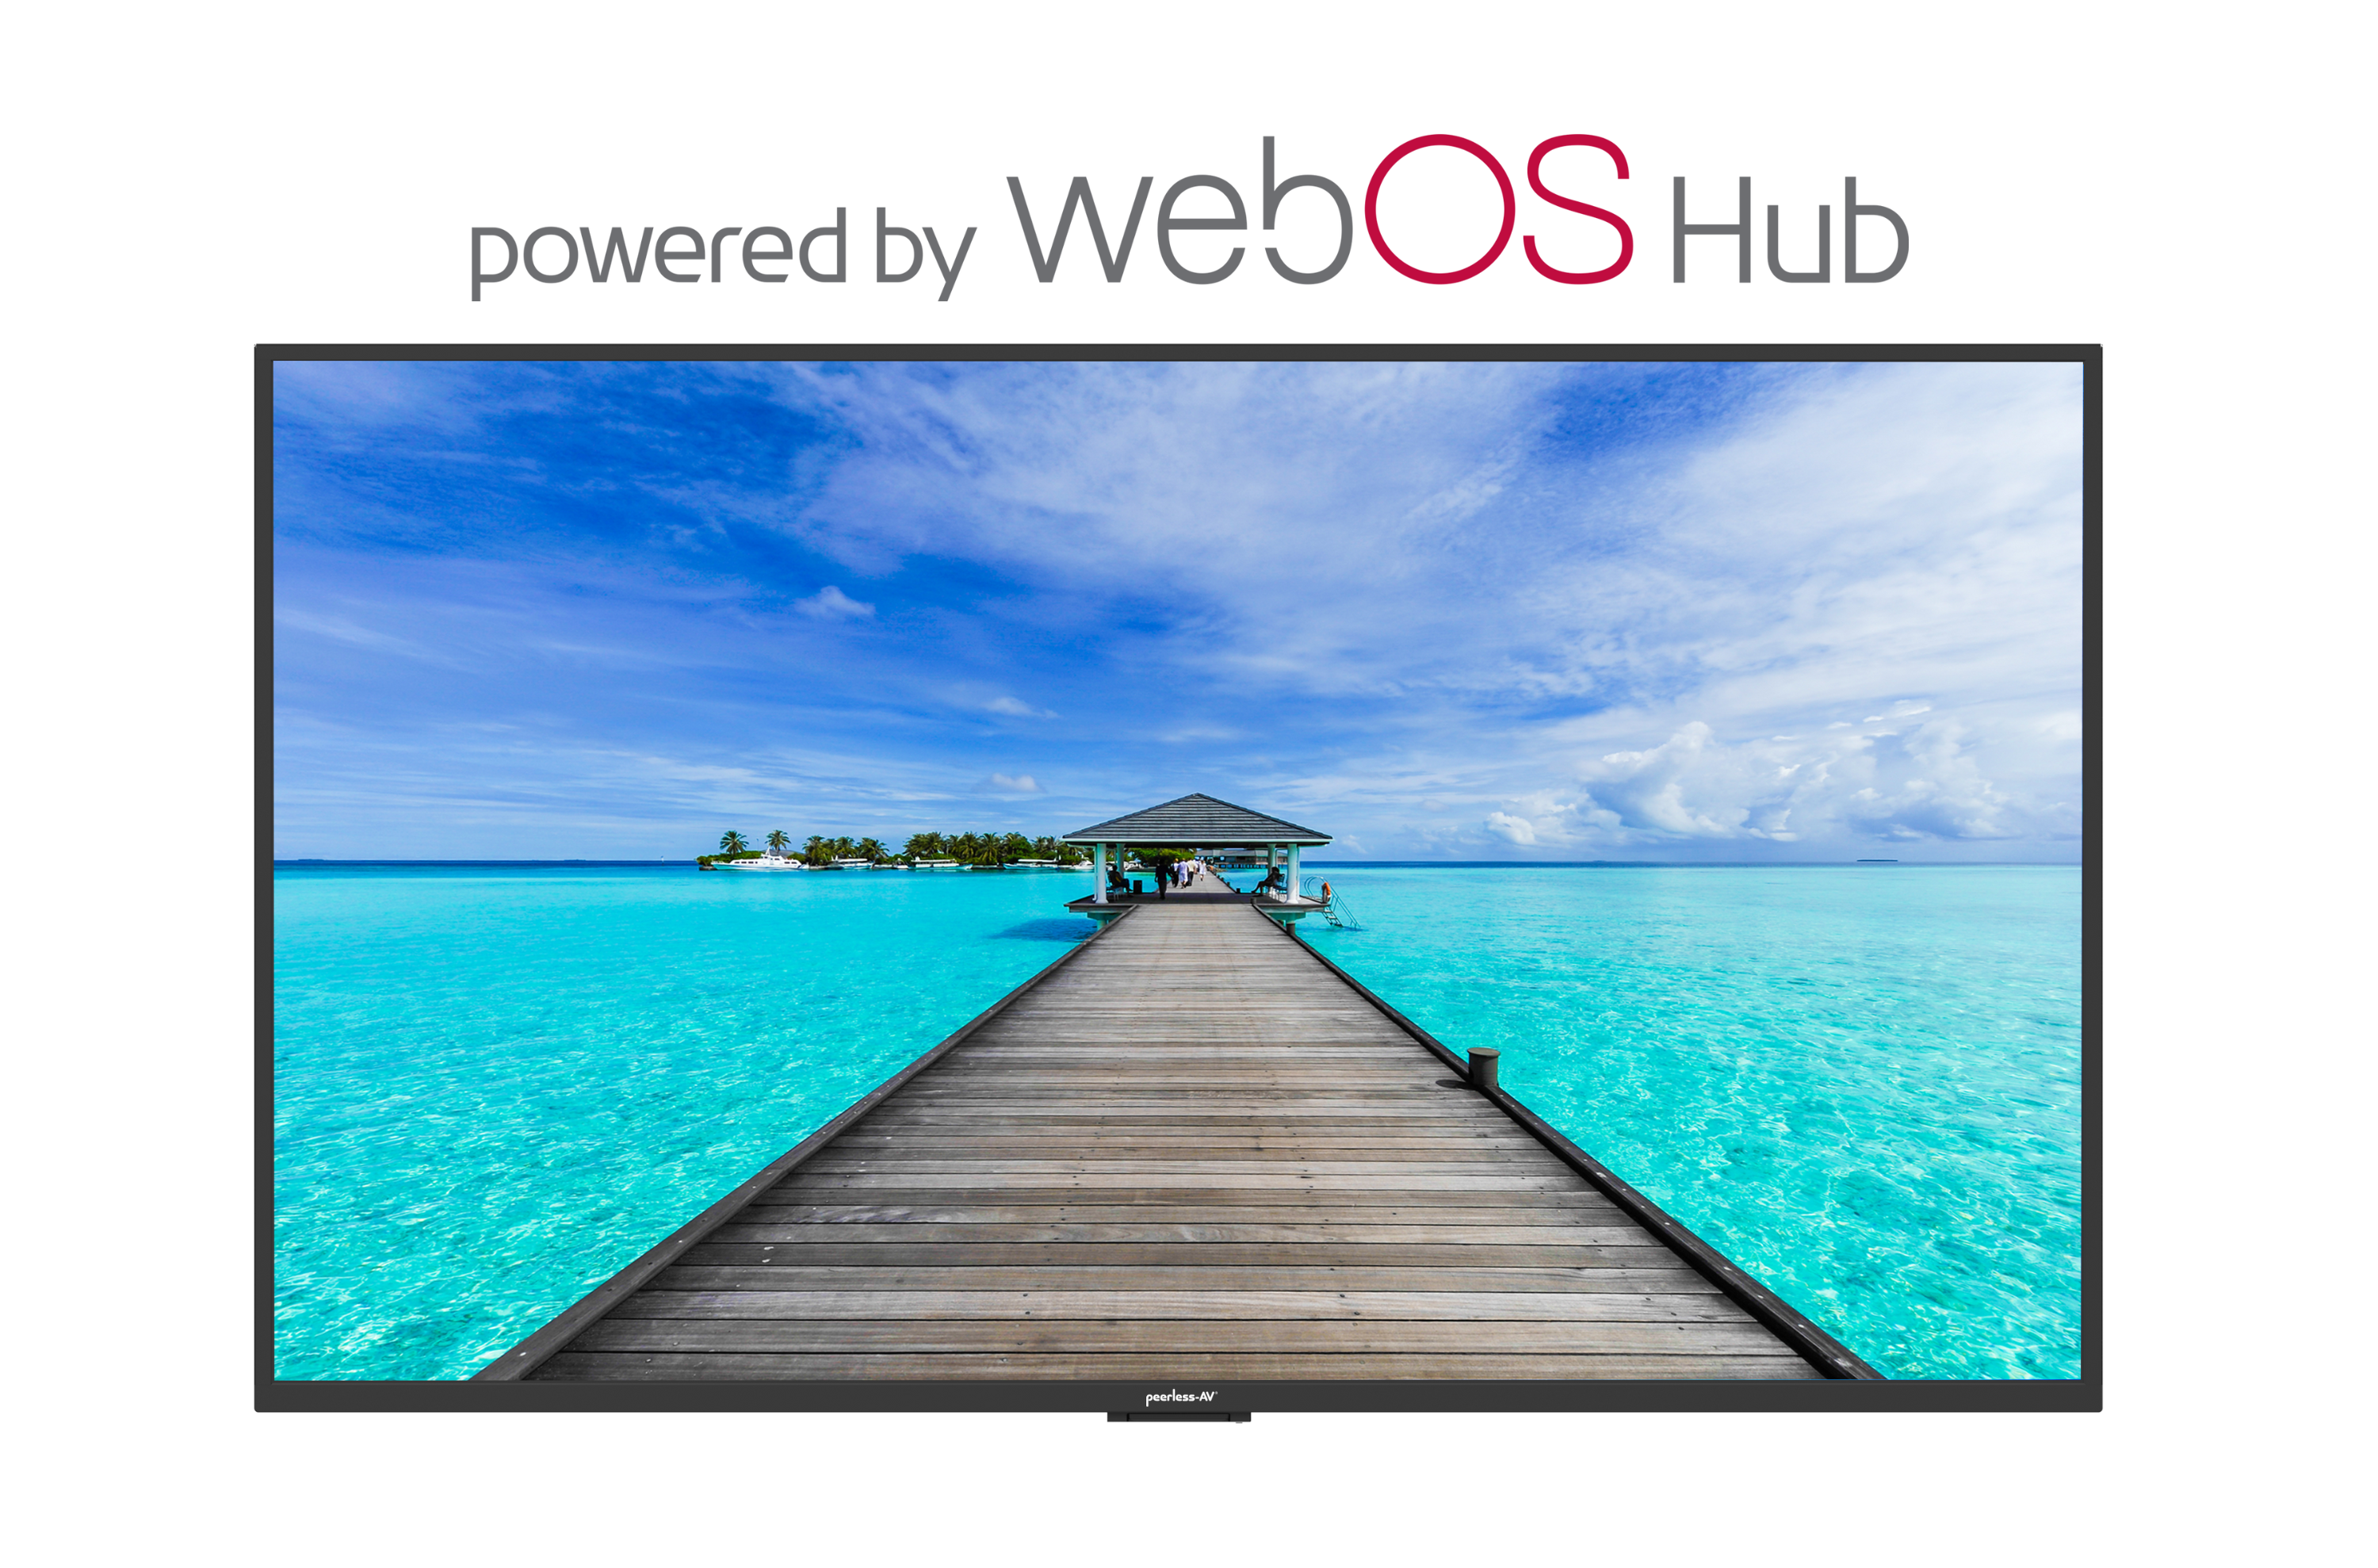 Powered by webOS Hub